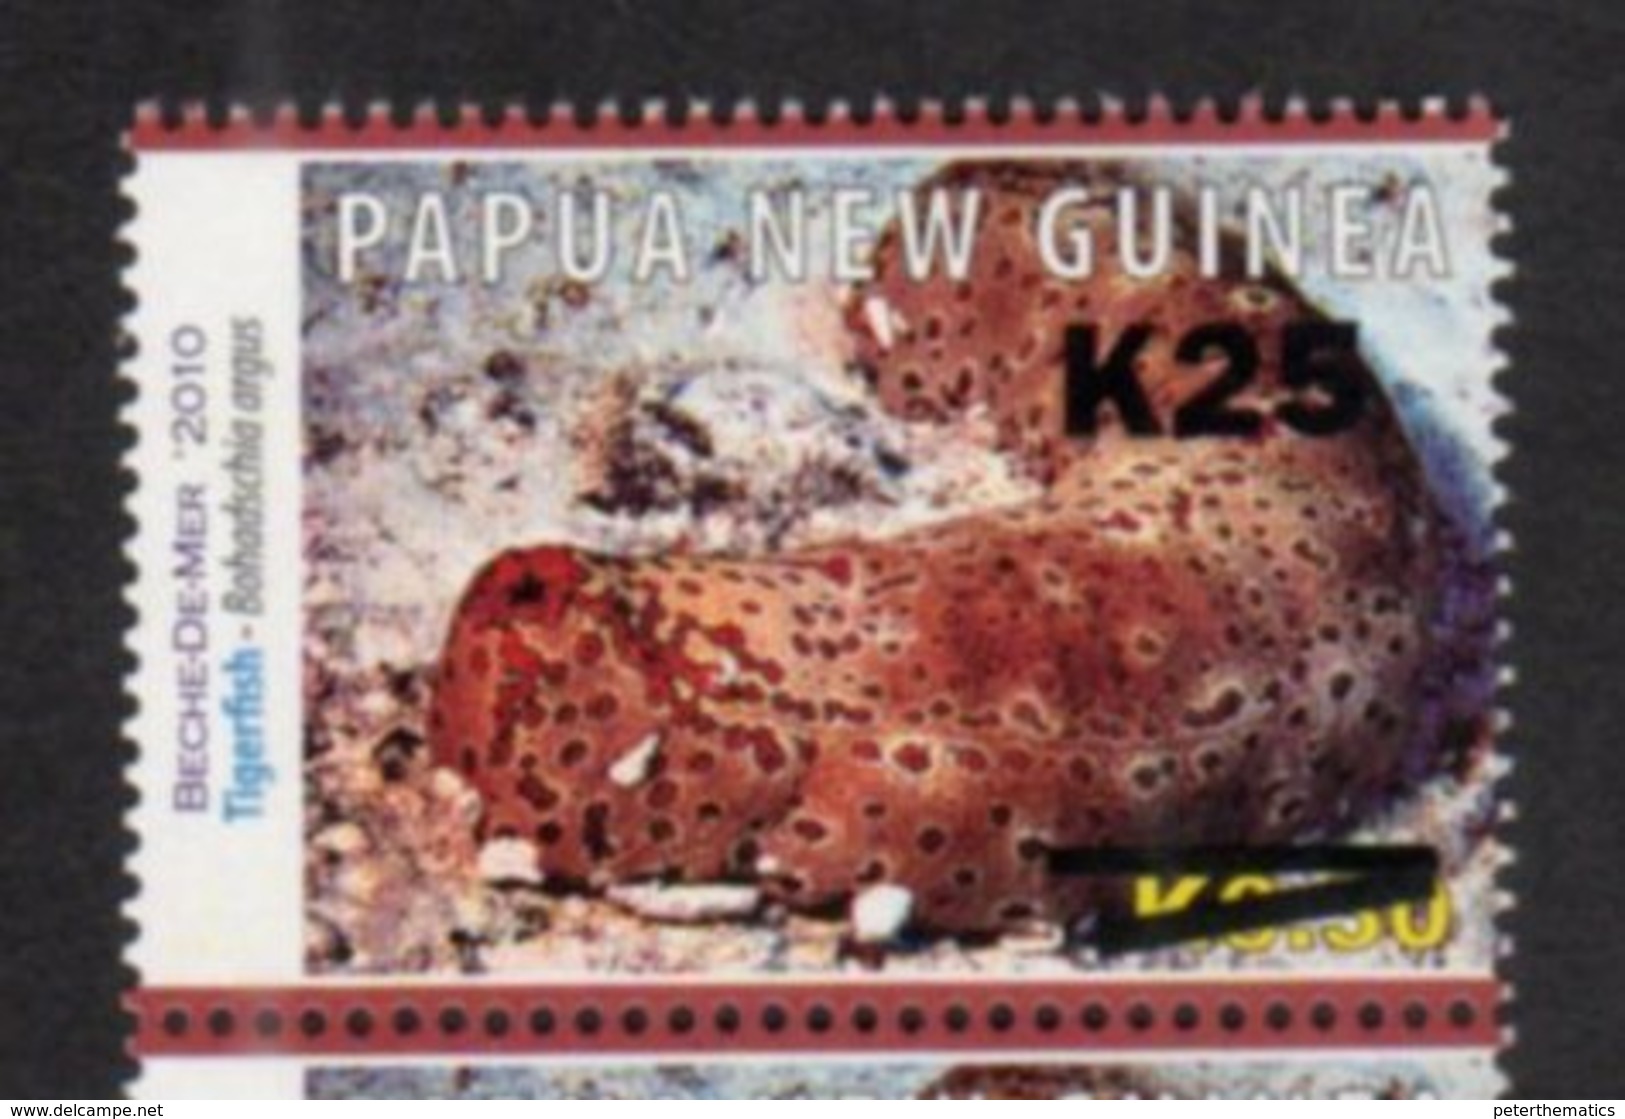 PAPUA NEW GUINEA, 2017, MNH, MARINE LIFE, OVERPRINT, 1v , VERY SCARCE - Marine Life